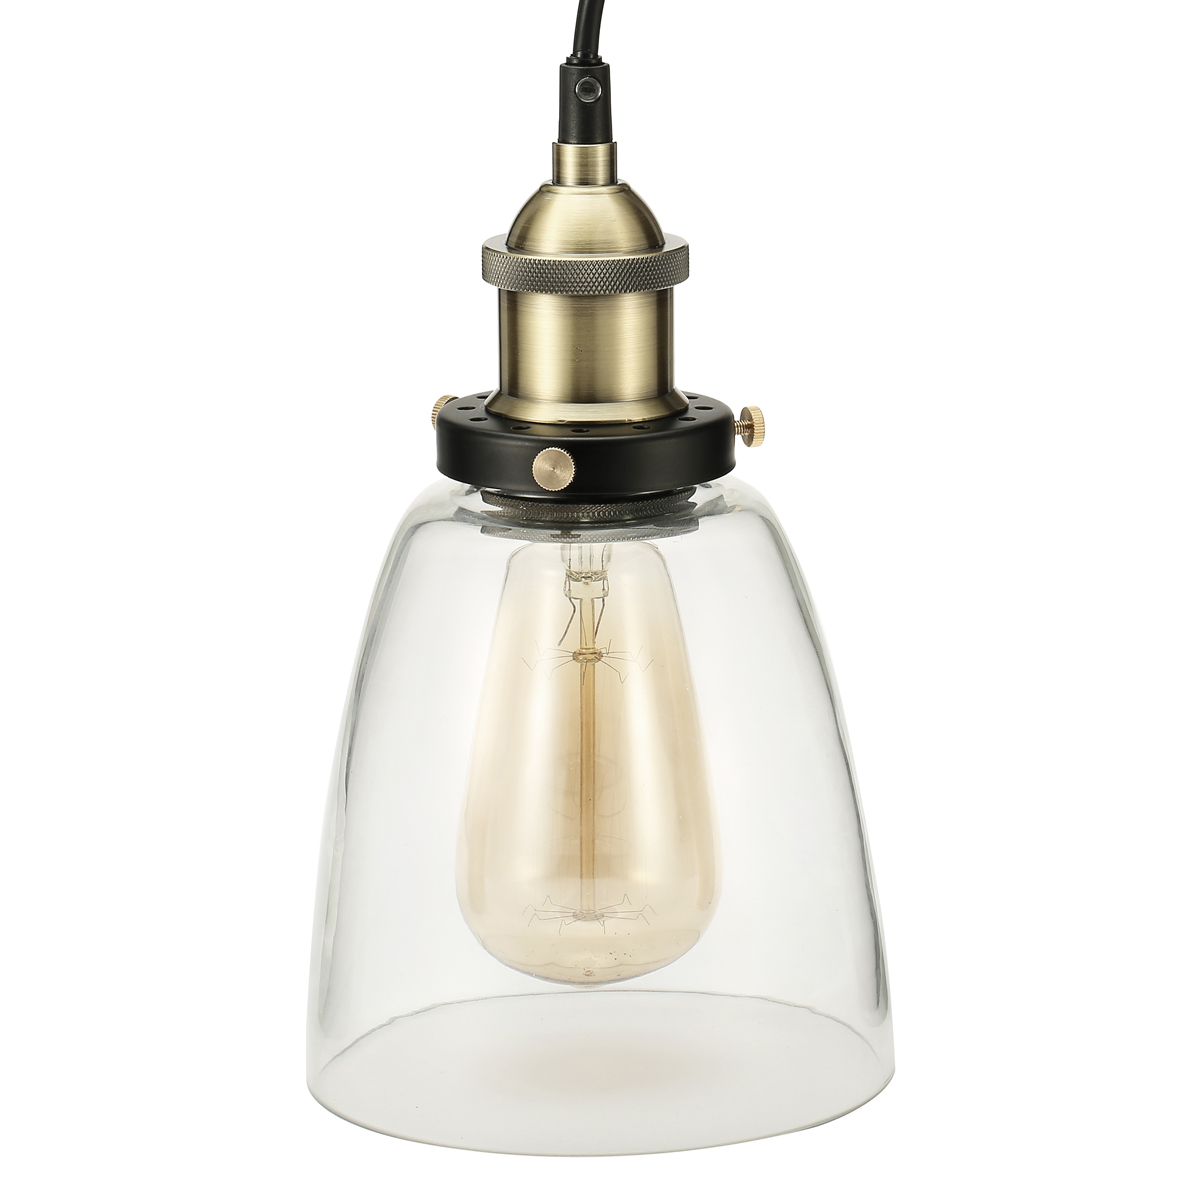 KINGSO-110V-E26E27-Vintage-Industrial-Pendant-Light-Bell-like-Glass-Shade-Without-Bulb-1896142-5